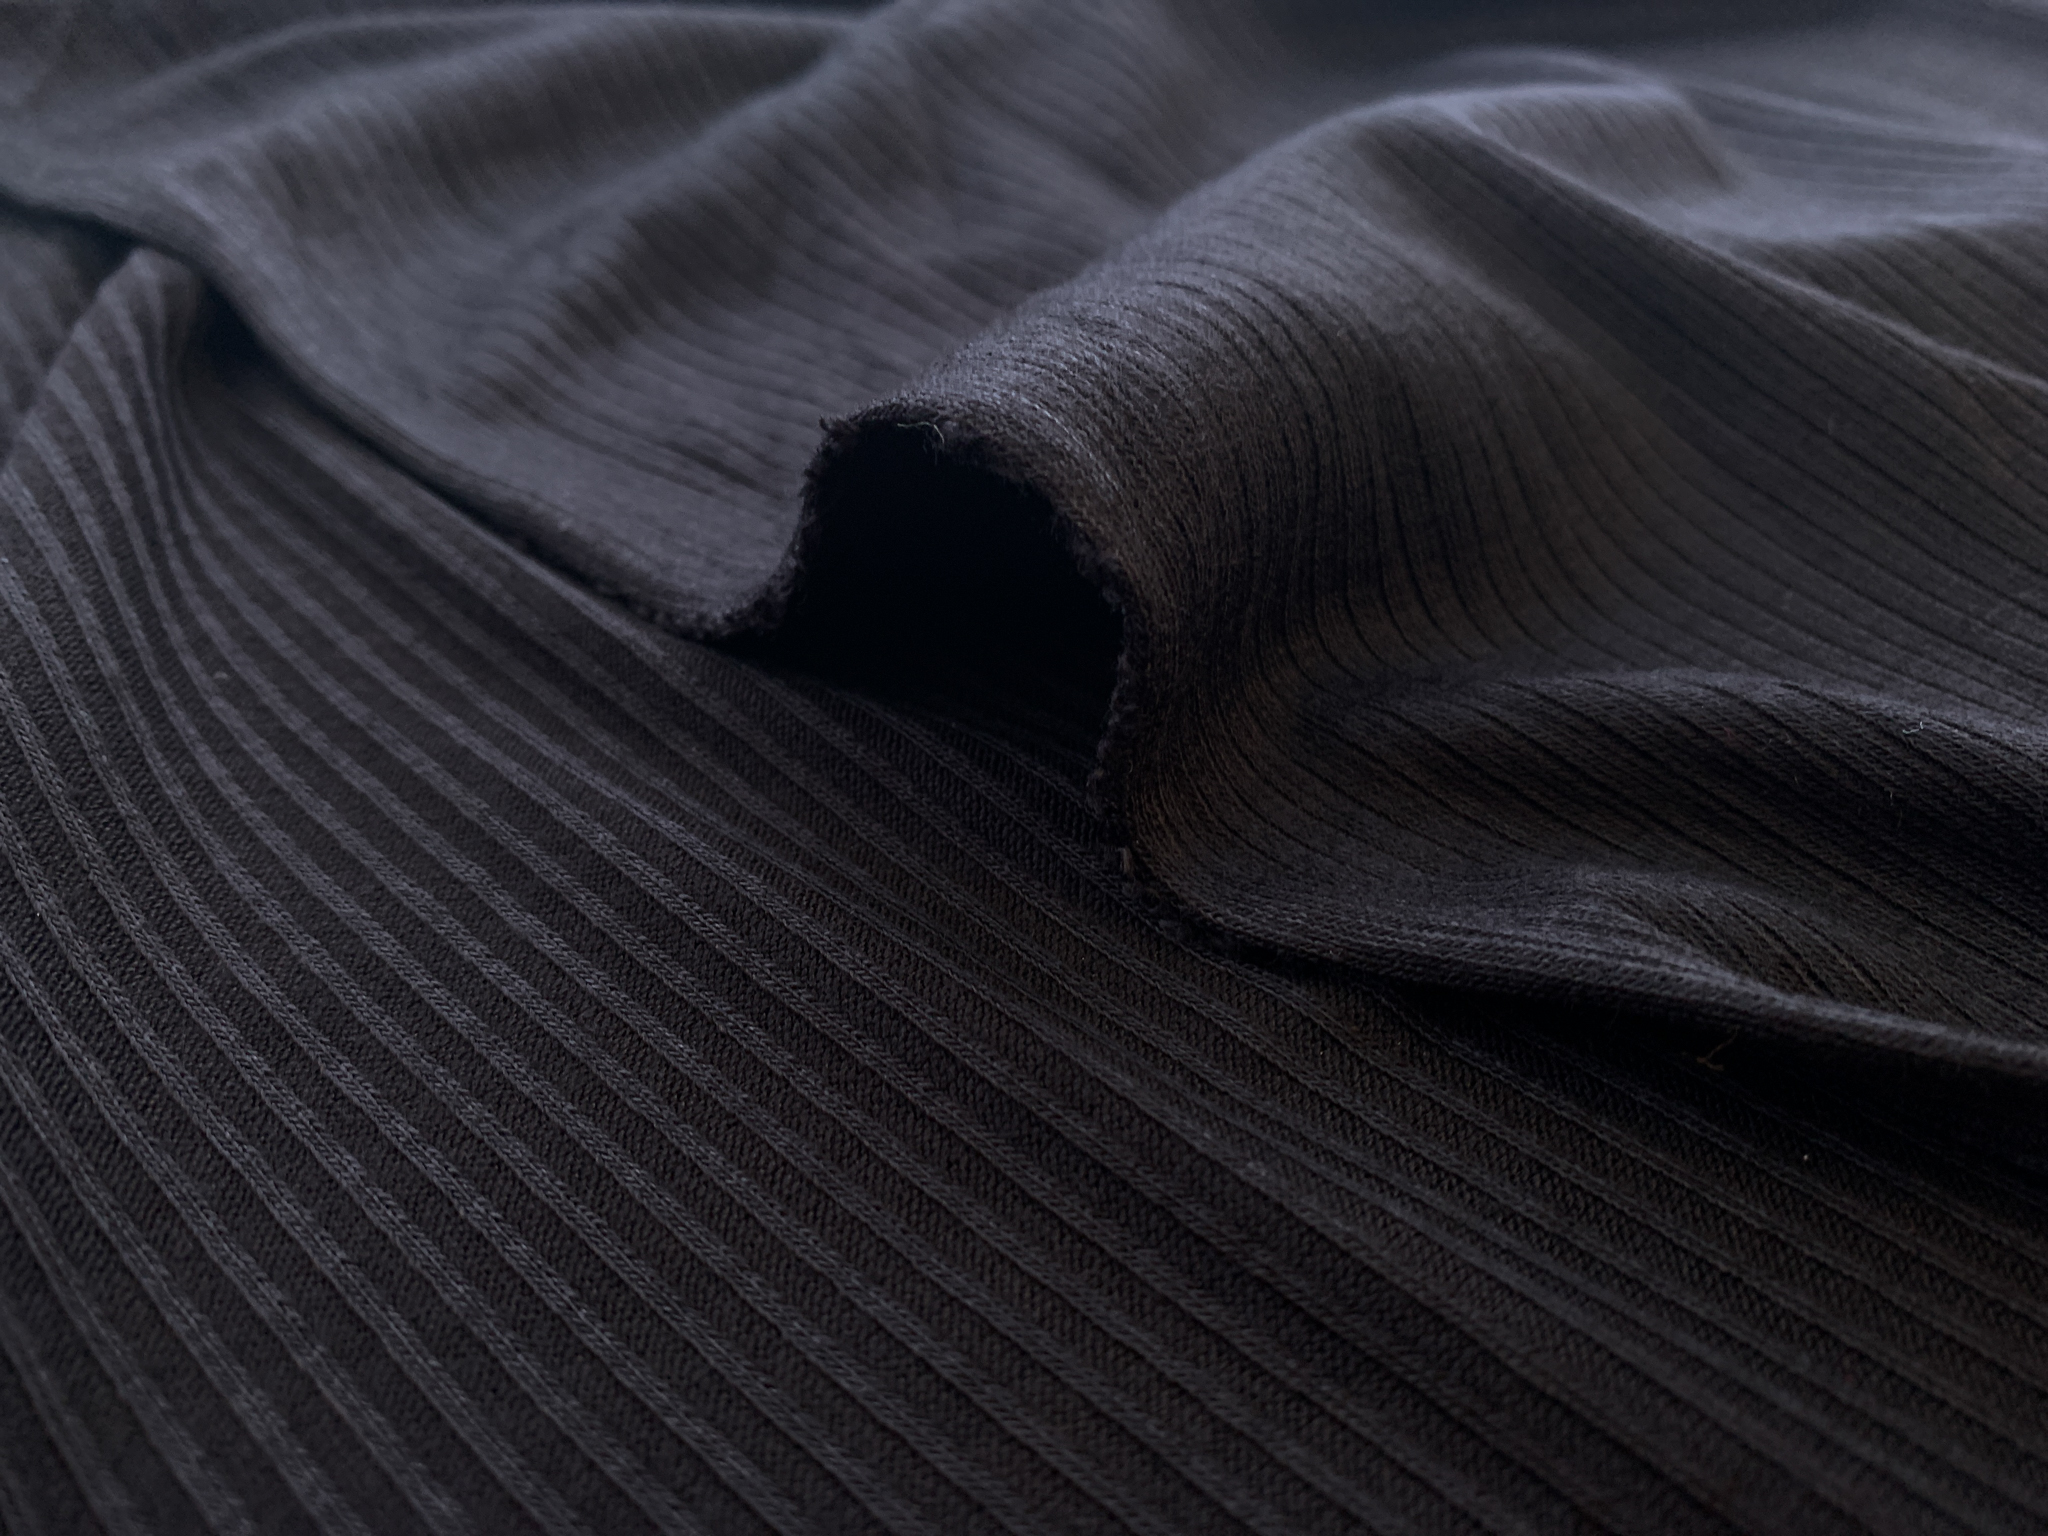 Polyester/Spandex Knit - Black - Stonemountain & Daughter Fabrics